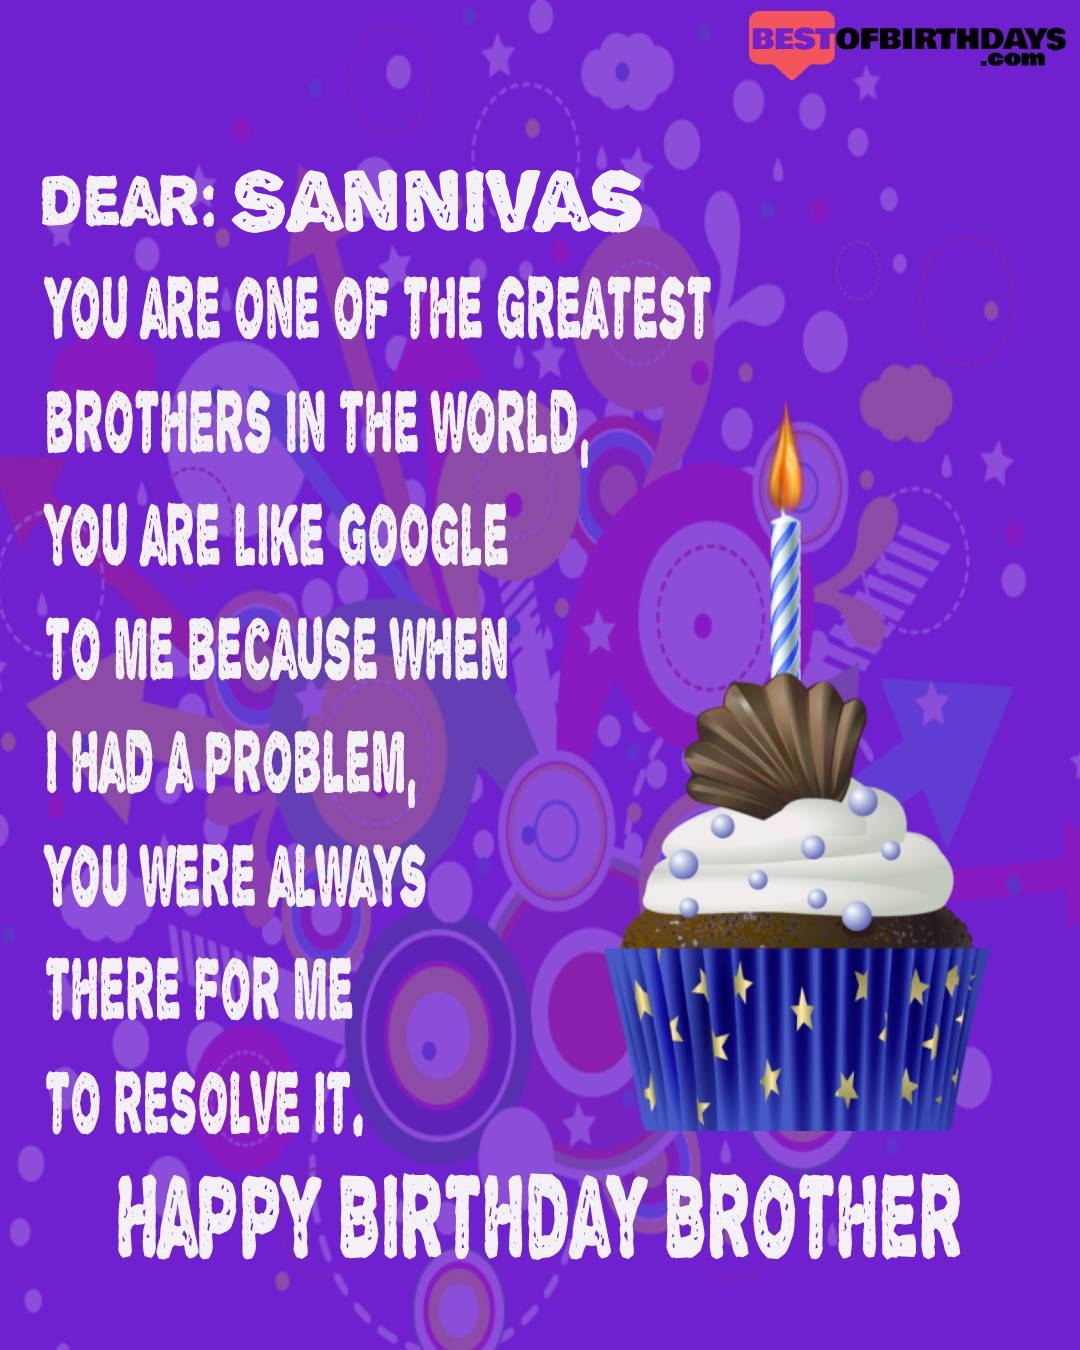 Happy birthday sannivas bhai brother bro